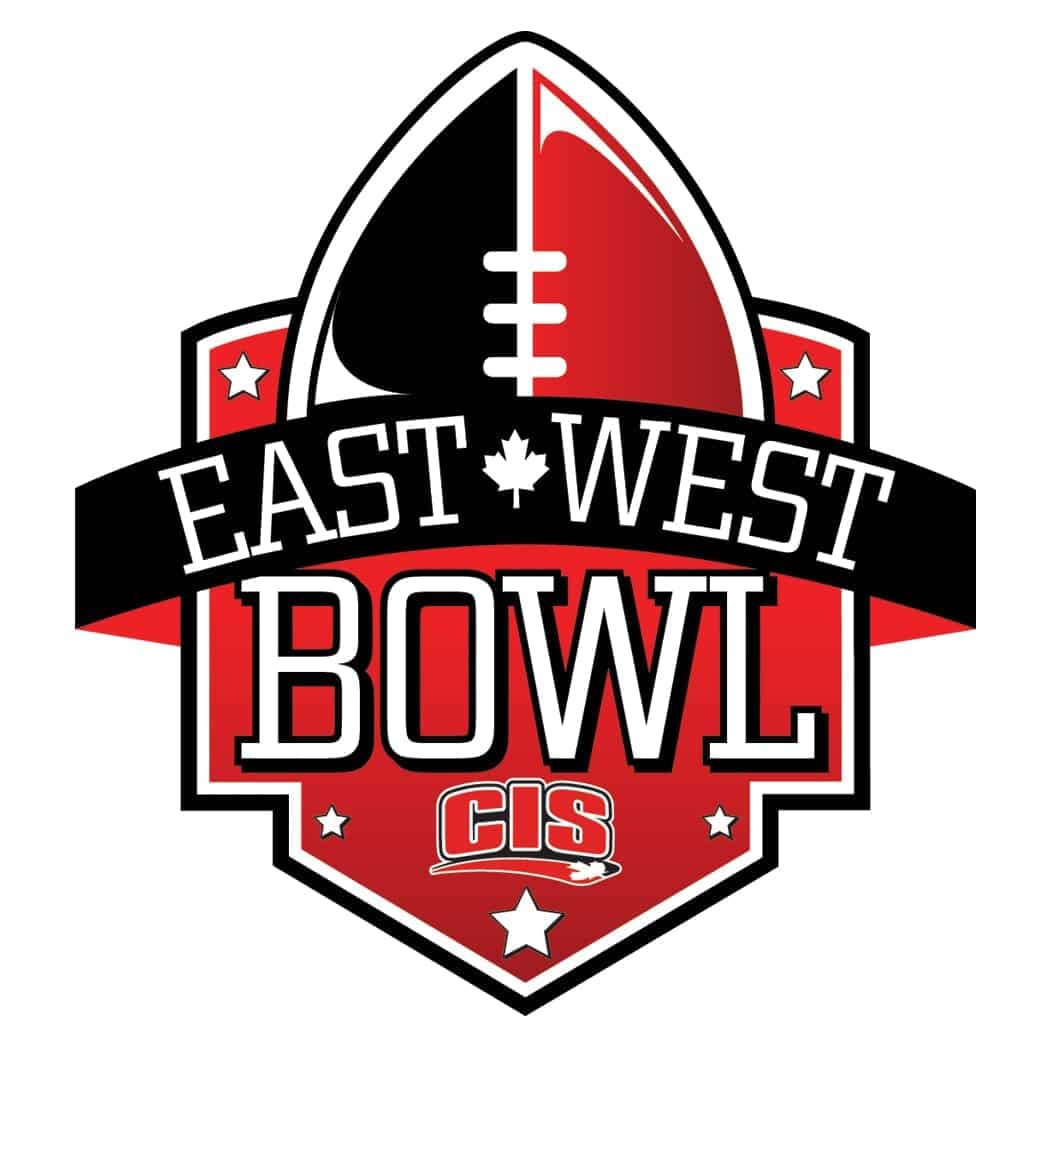 east west bowl